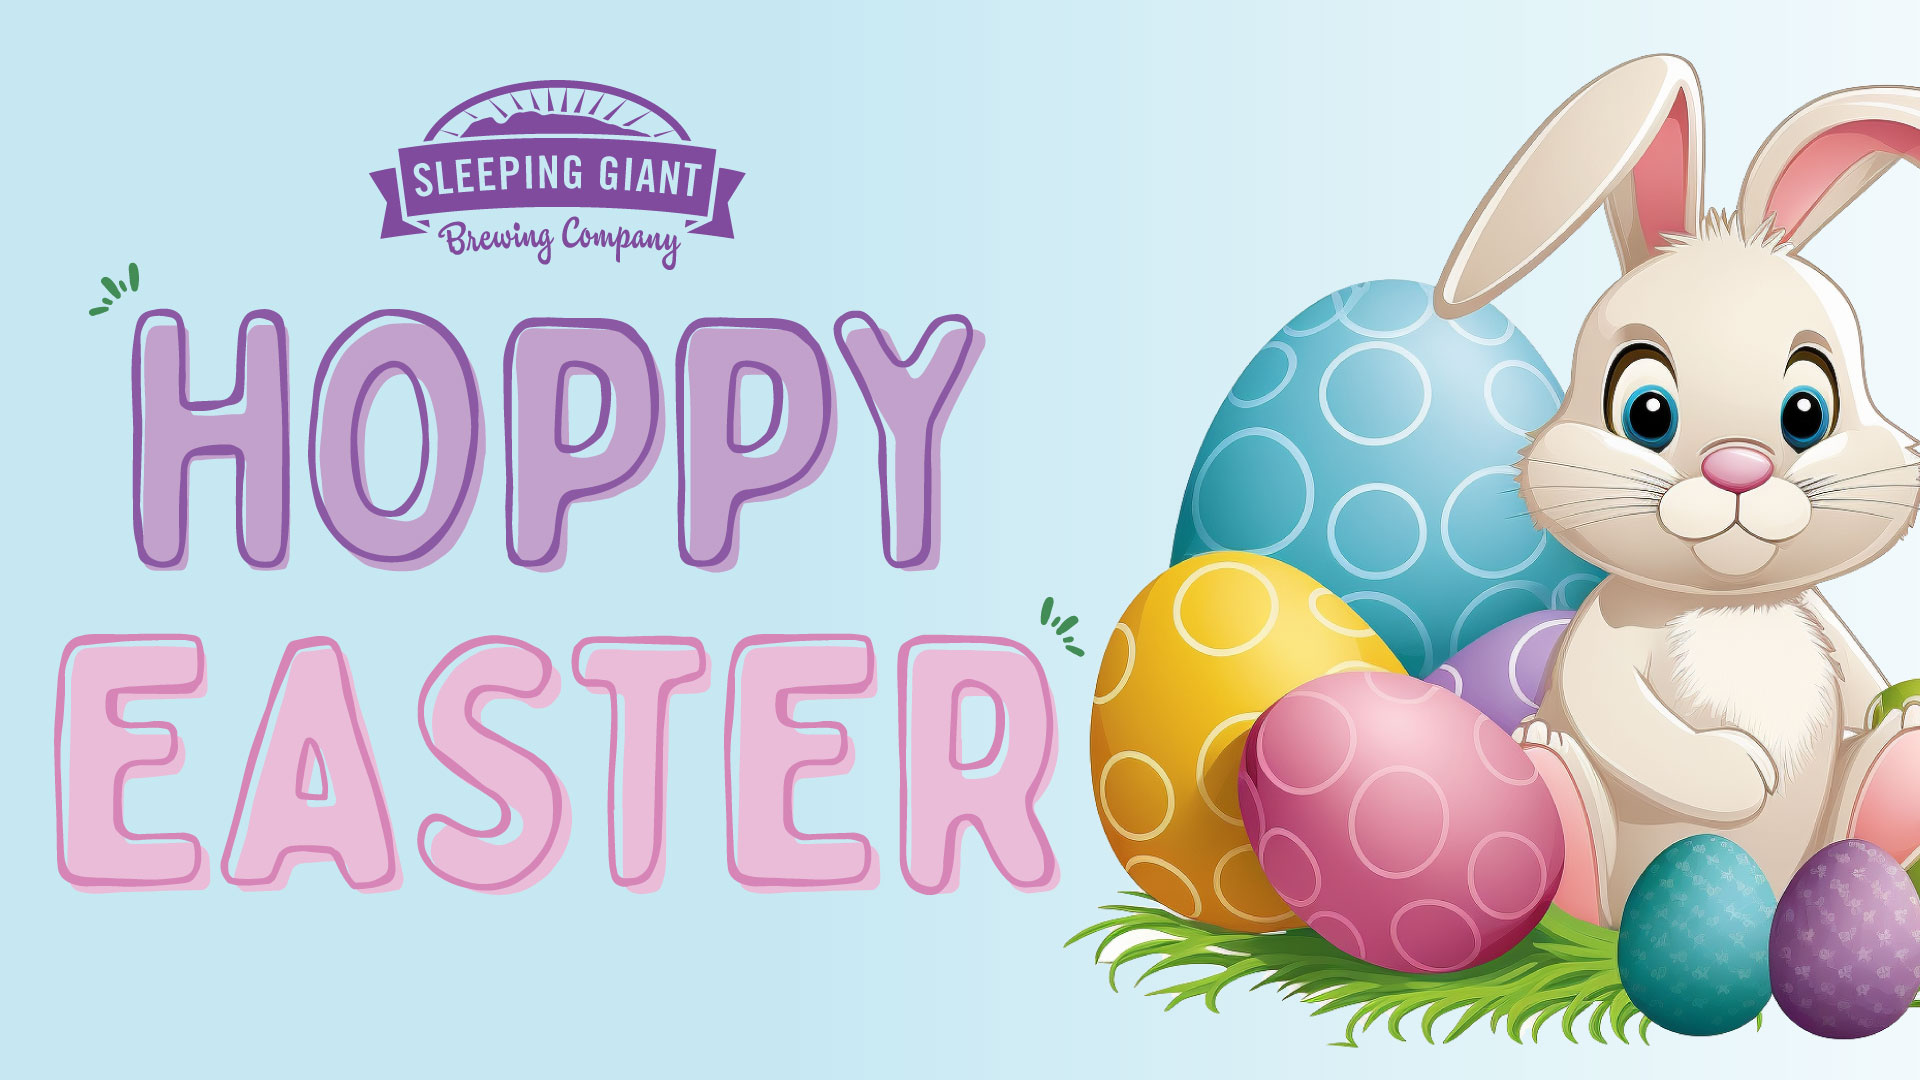 Hoppy Easter – Sleeping Giant Brewing Company